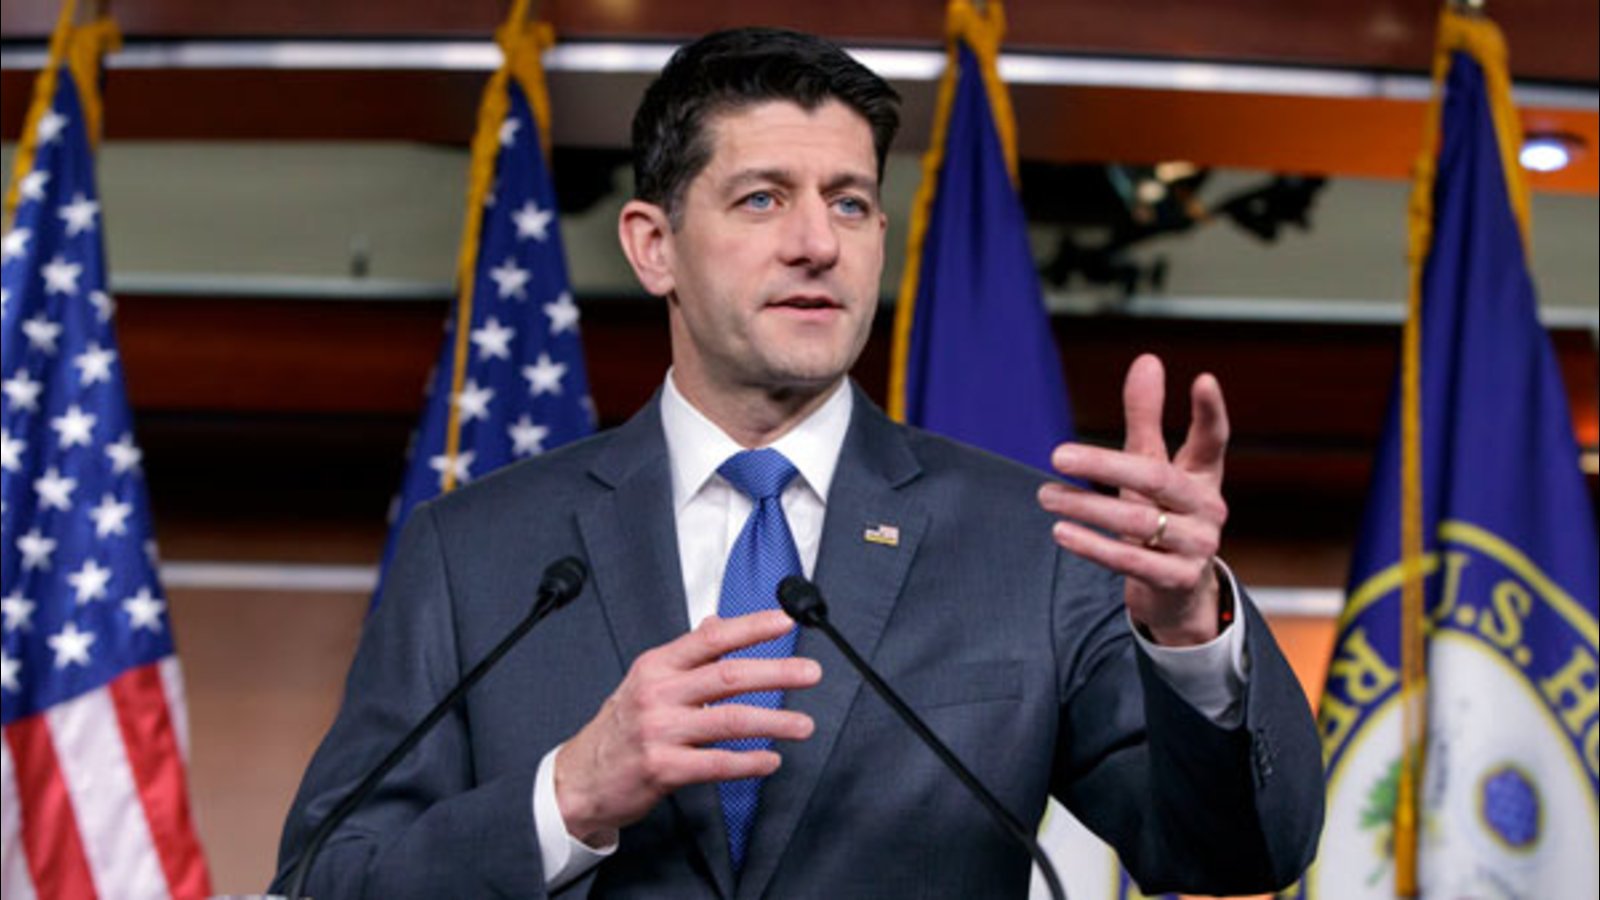 House Speaker Paul Ryan won